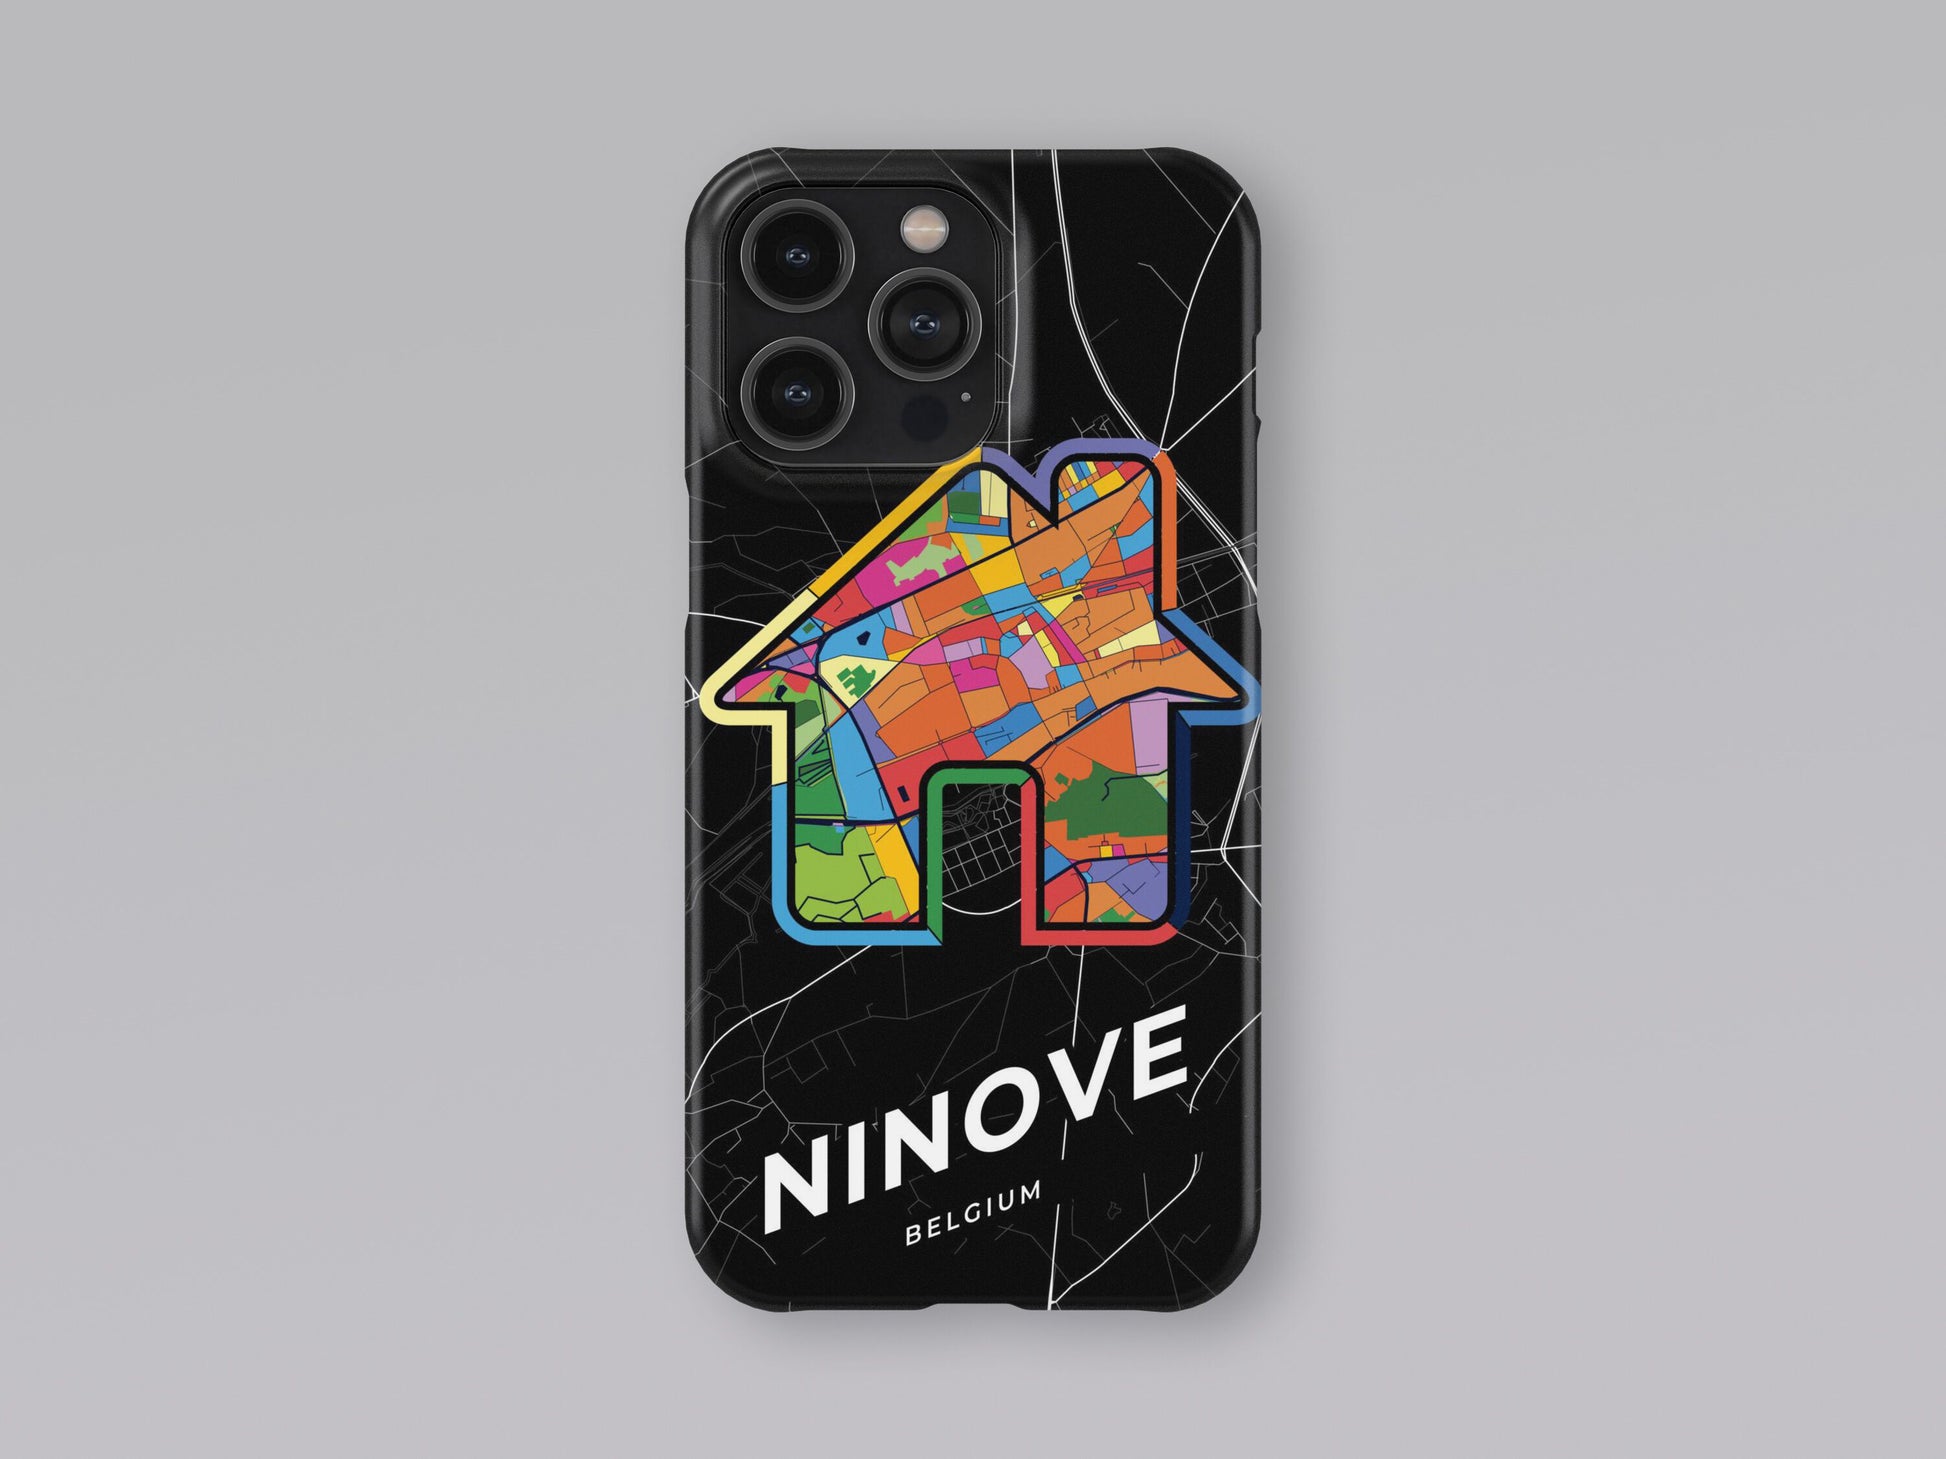 Ninove Belgium slim phone case with colorful icon. Birthday, wedding or housewarming gift. Couple match cases. 3